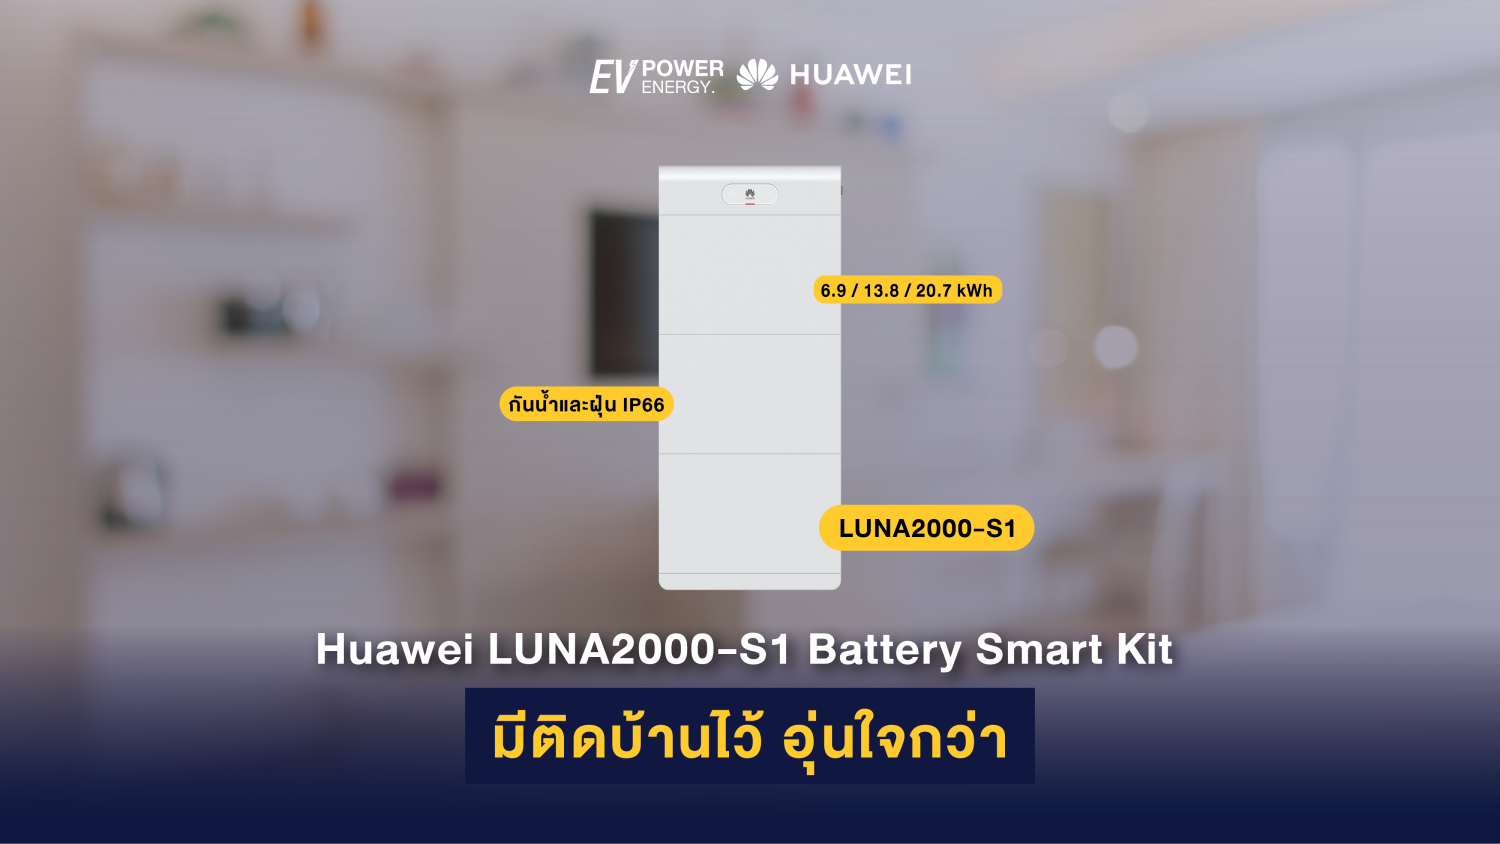 Huawei LUNA2000-S1 Battery Smart Kit มีติดบ้านไว้ อุ่นใจกว่า